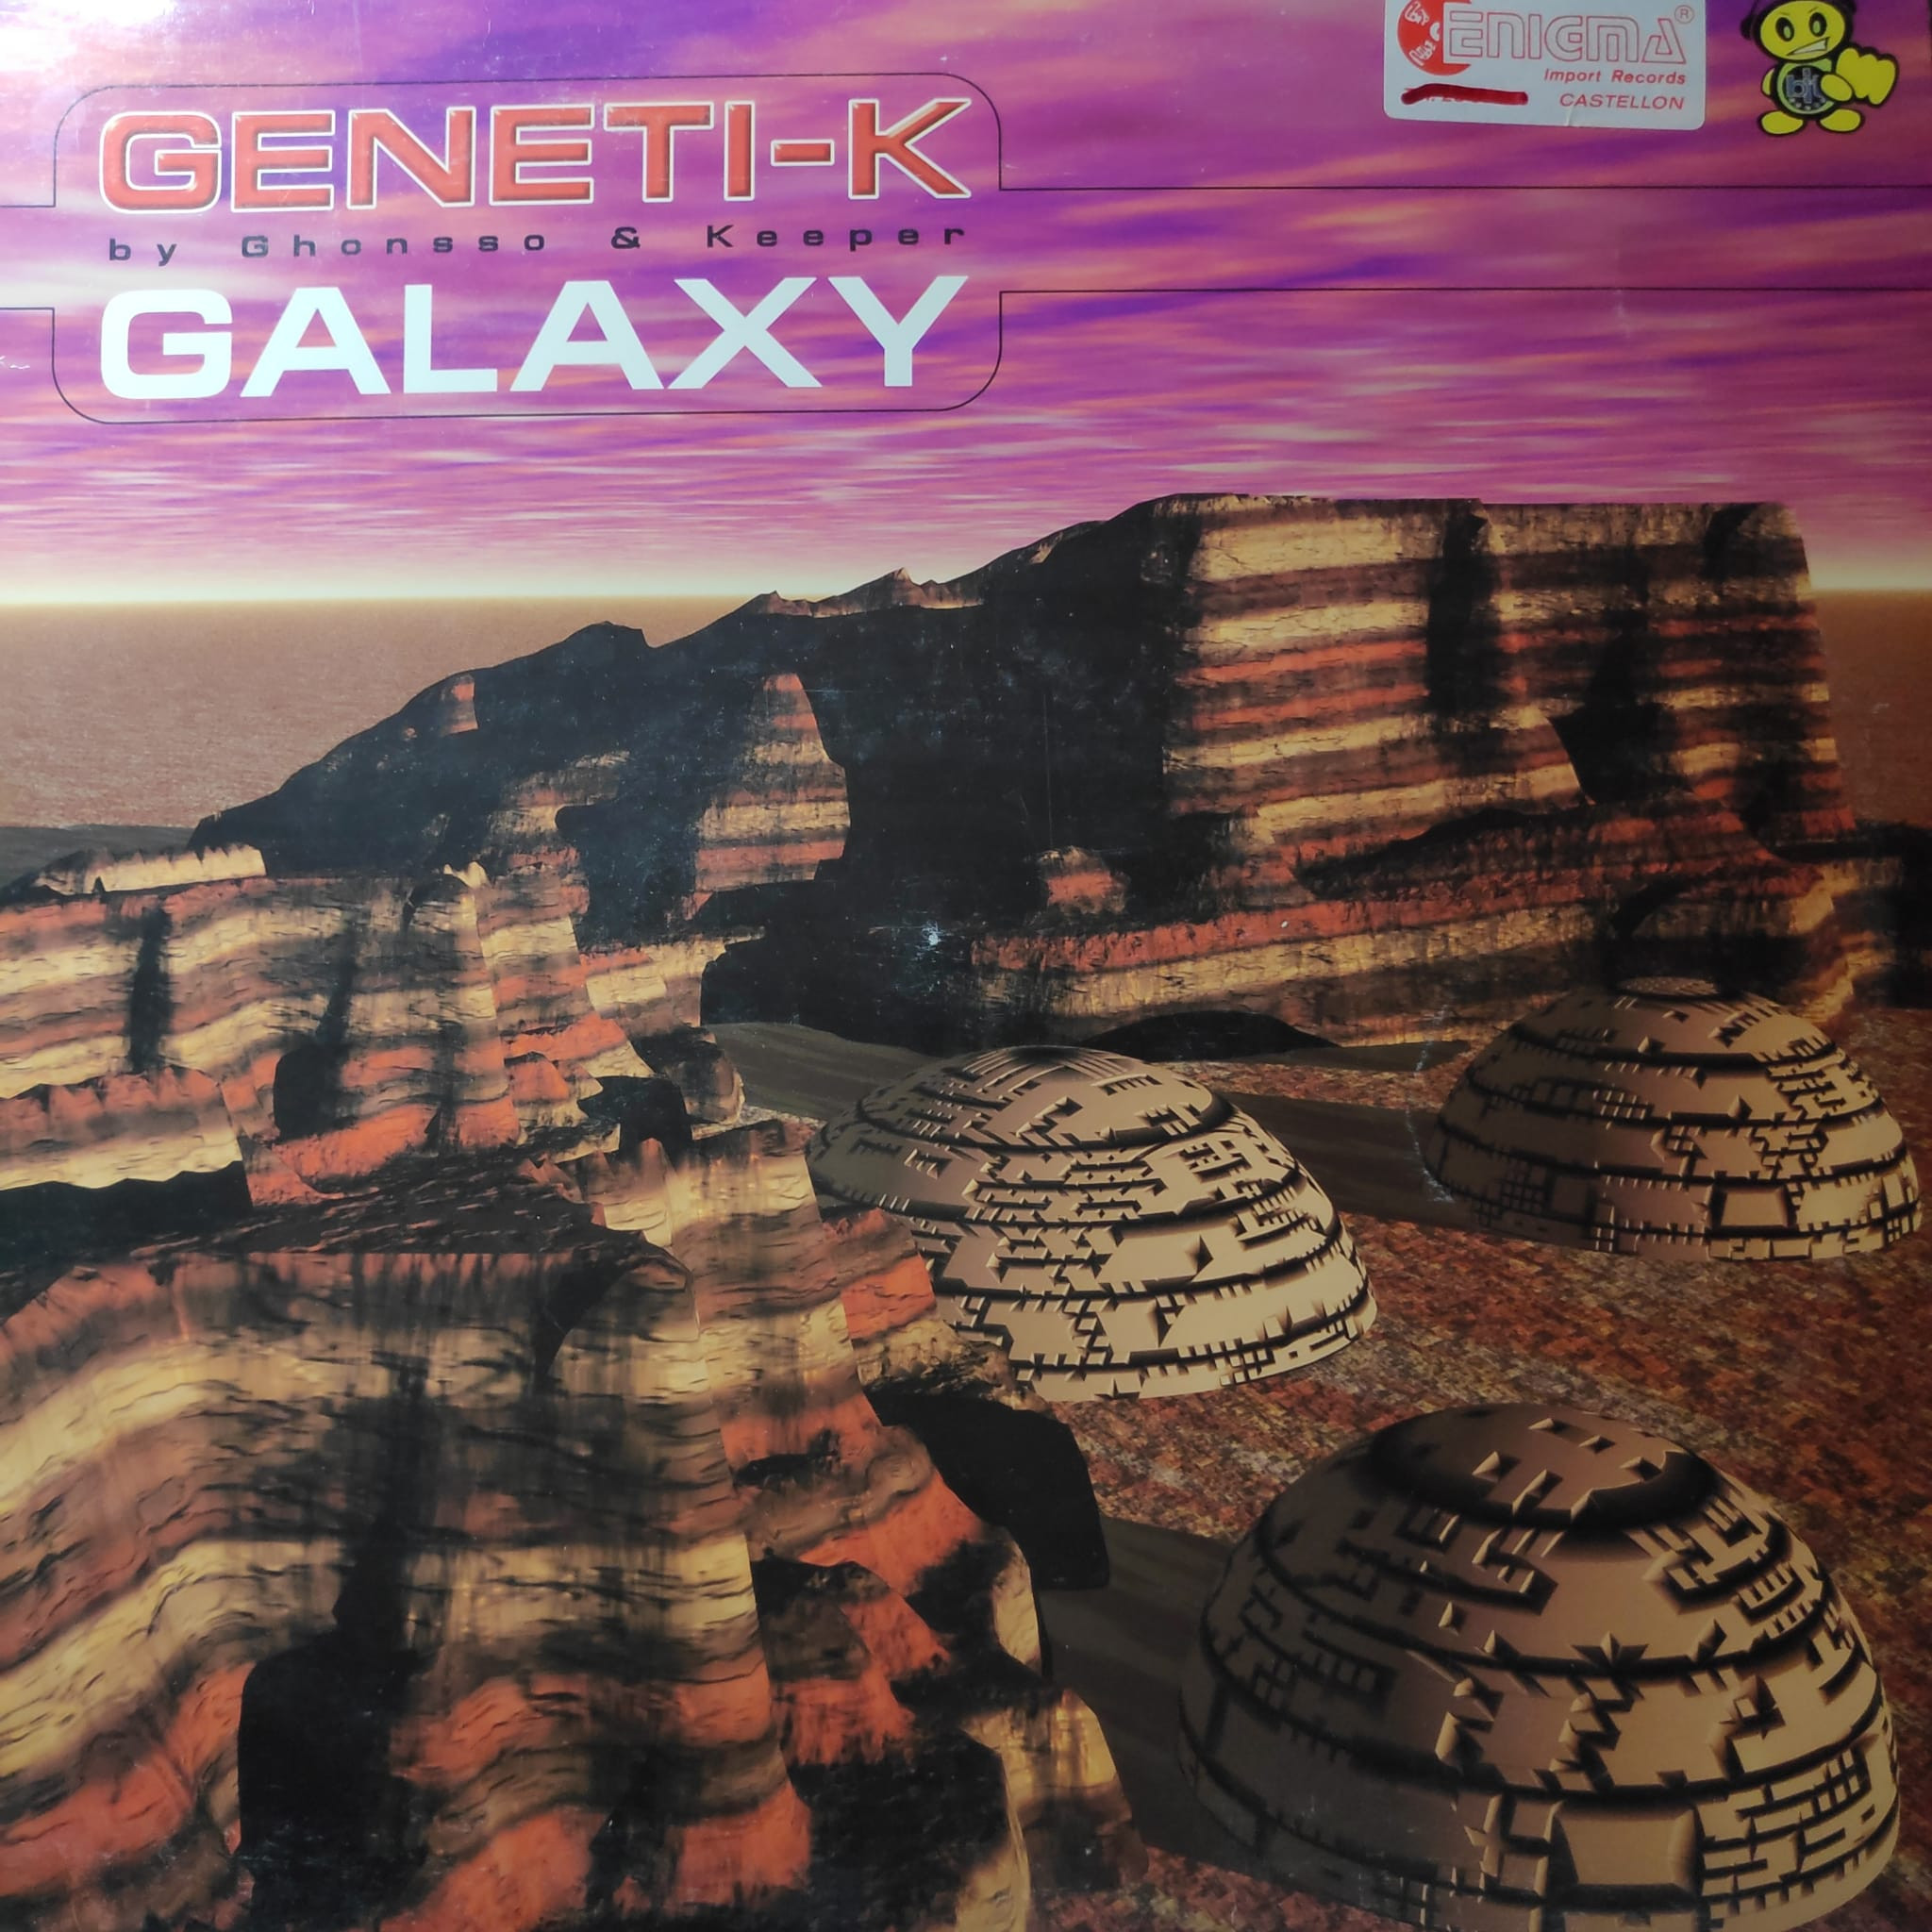 (23745) Geneti-k By Ghonsso & Keeper – Galaxy